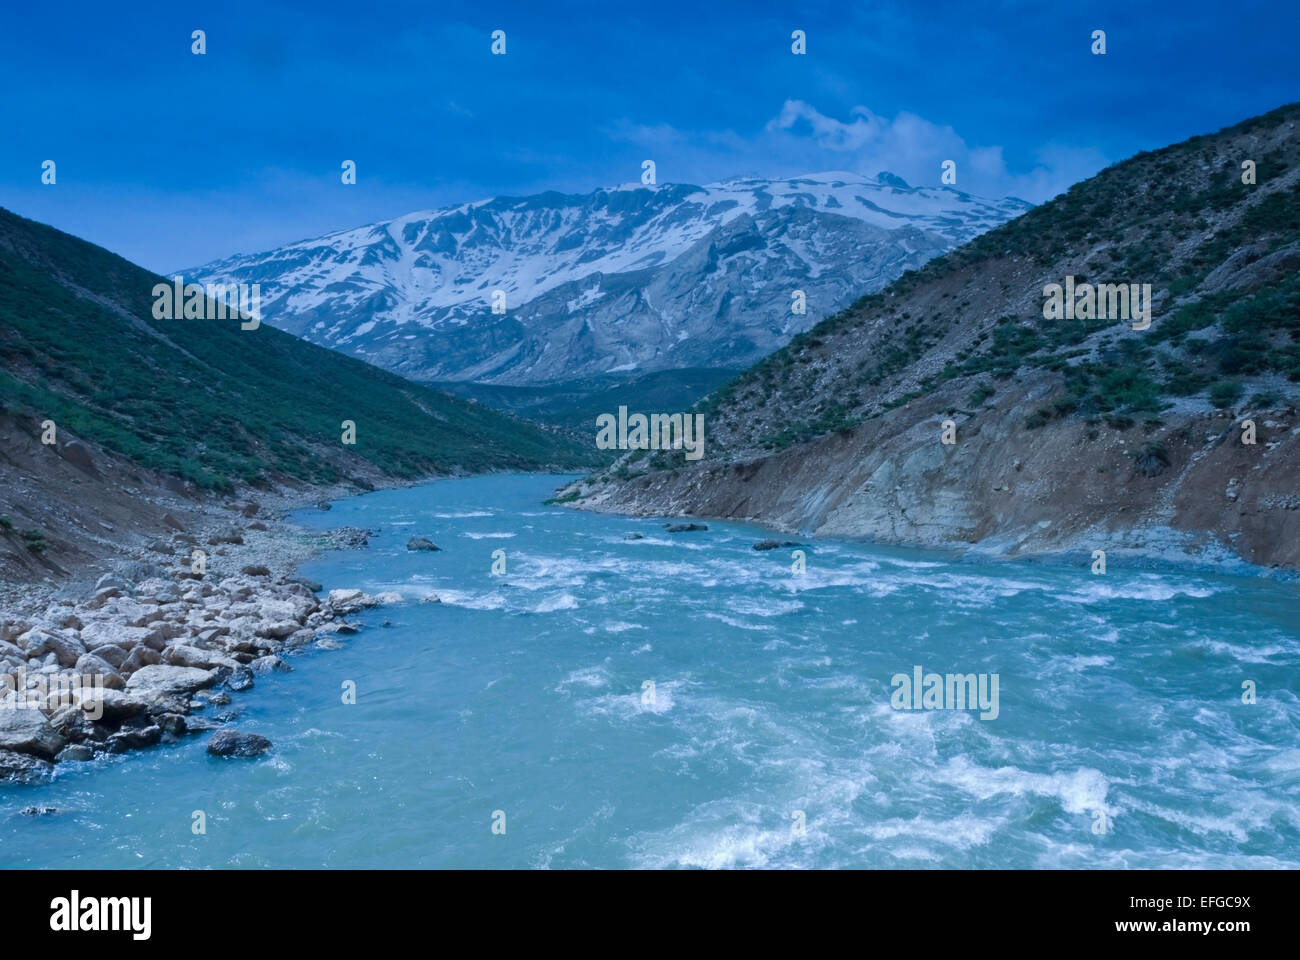 Zard Kuh,Chaharmahal and Bakhtiari Province, Iran Stock Photo